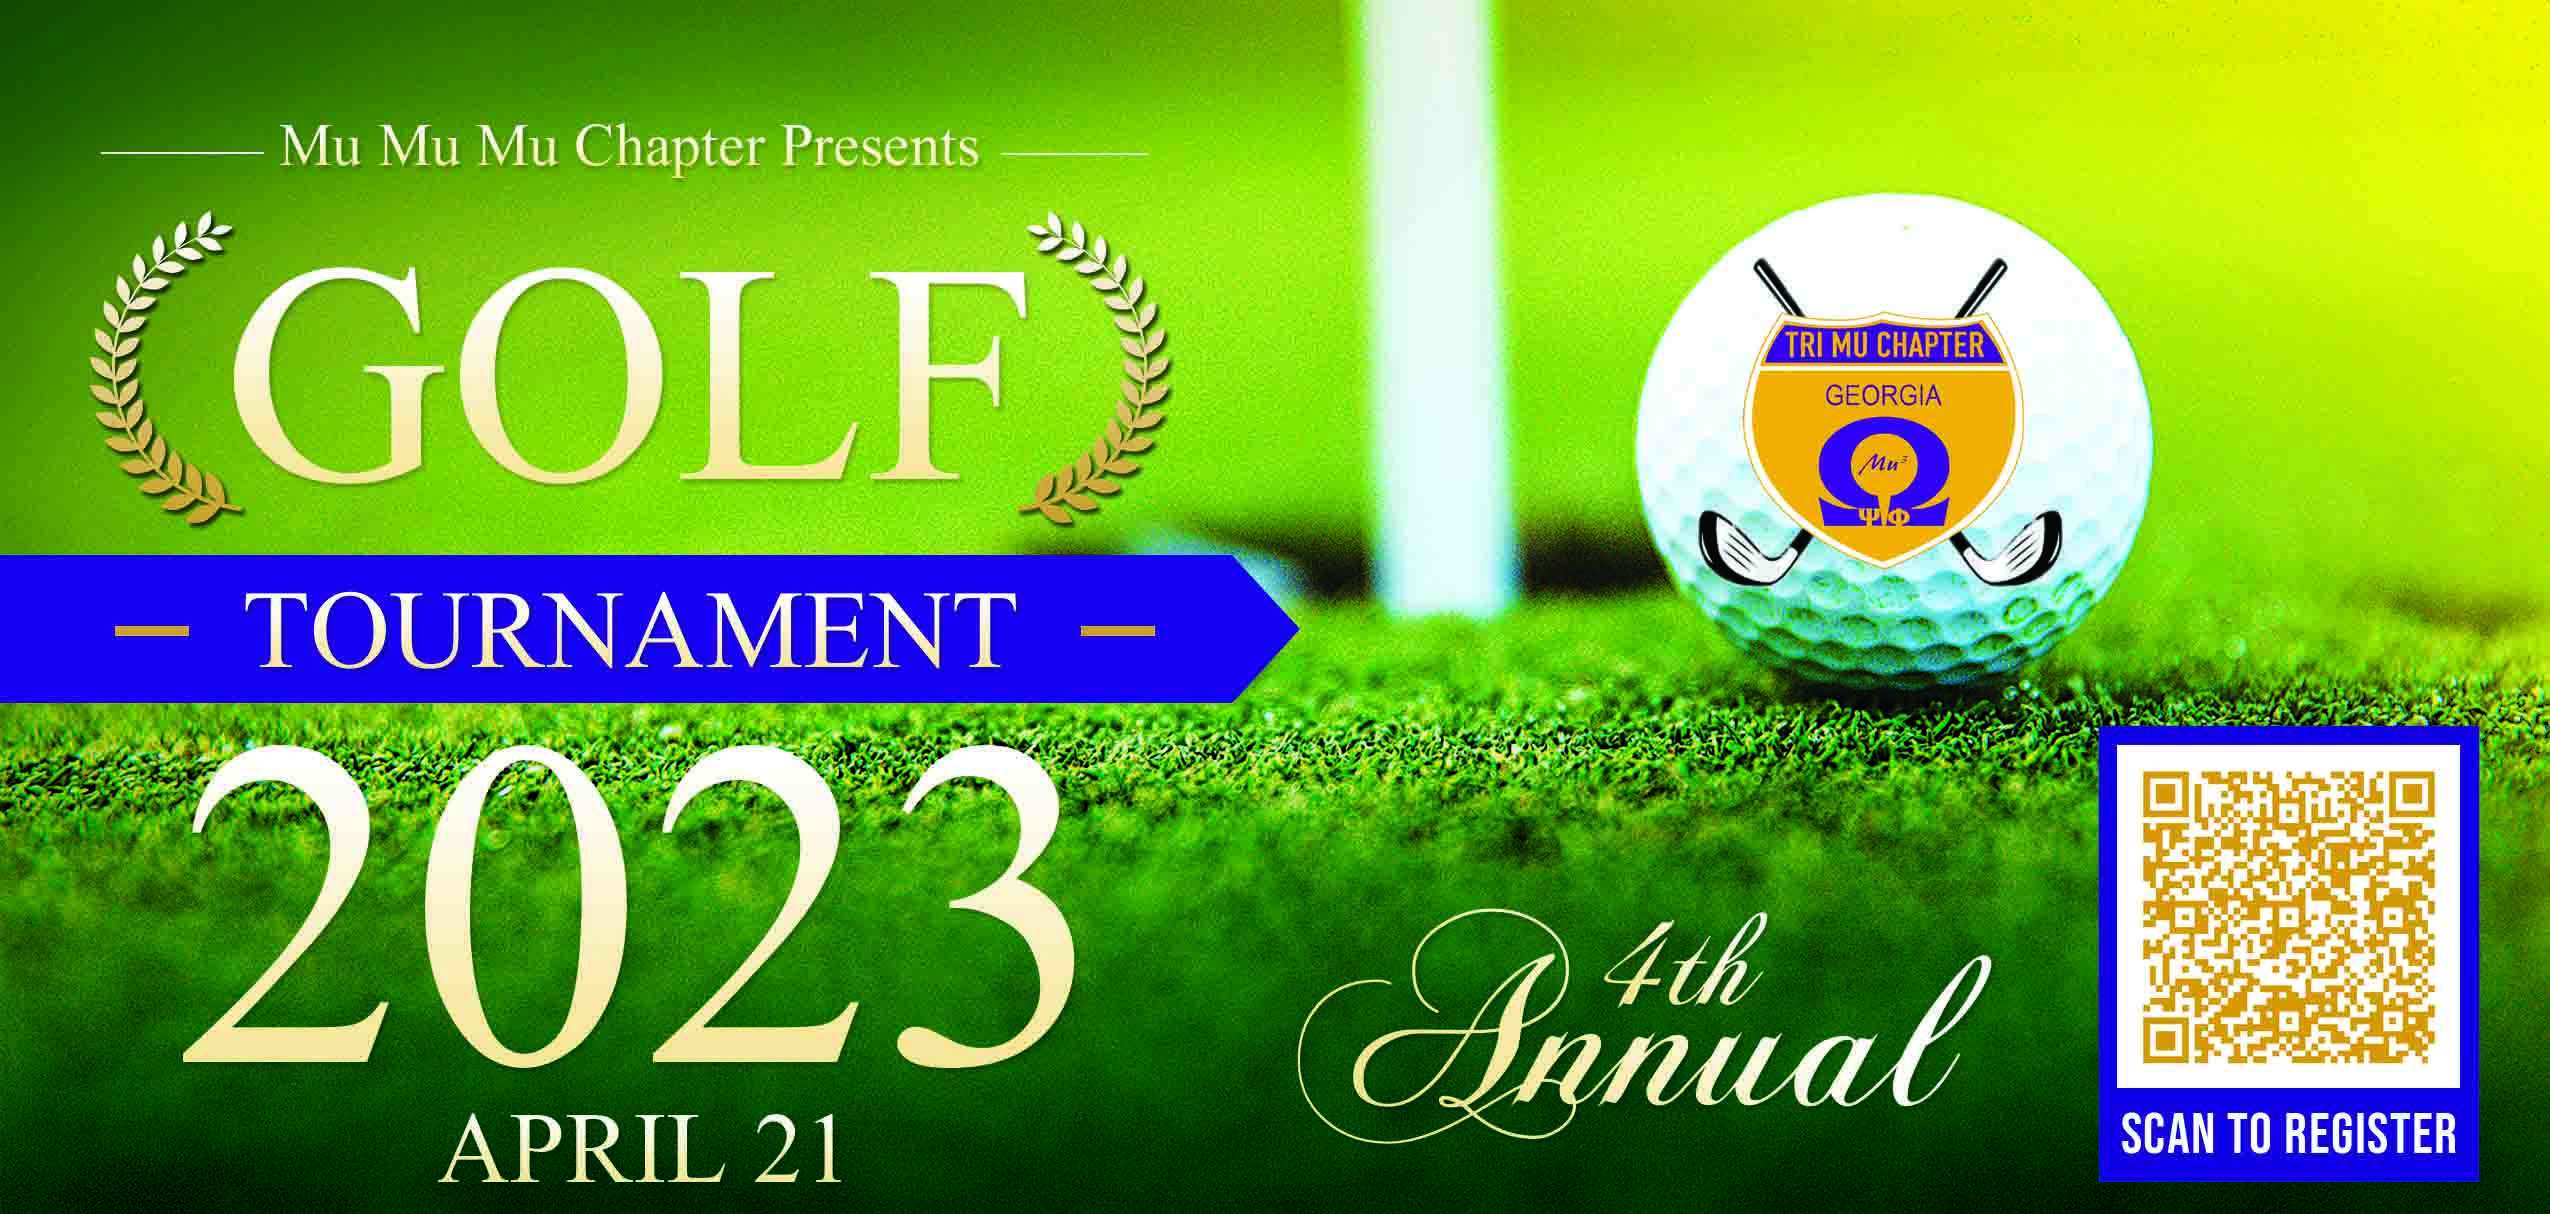 Mu Mu Mu Chapter of Omega Psi Phi Fraternity, Inc. Charity Golf Tournament